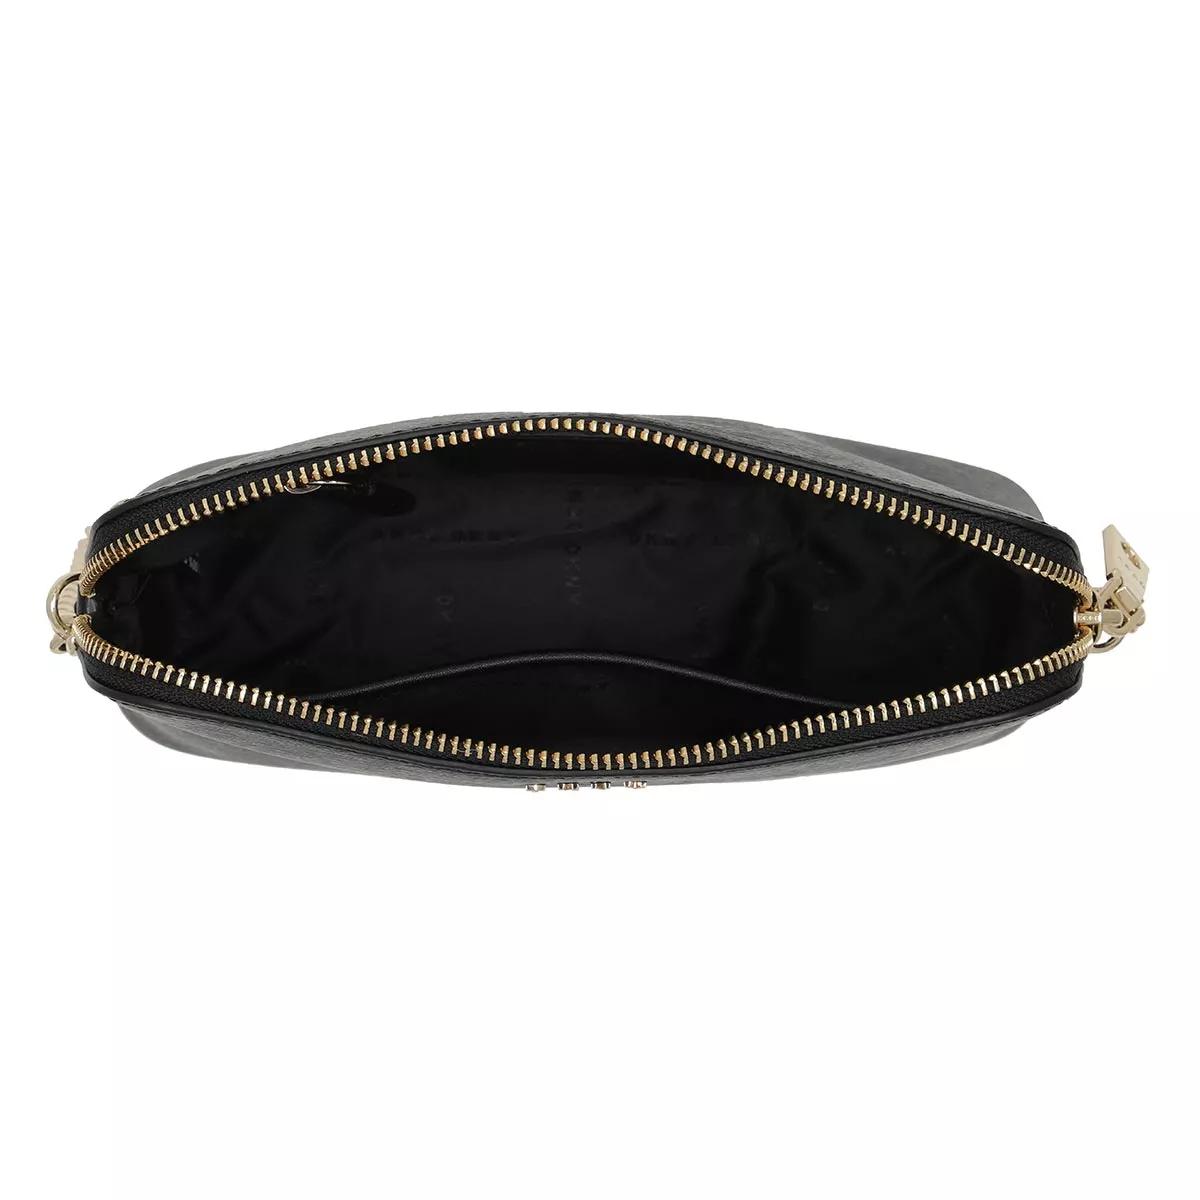 DKNY Lexington Dome Crossbody, Black/Gold: Handbags